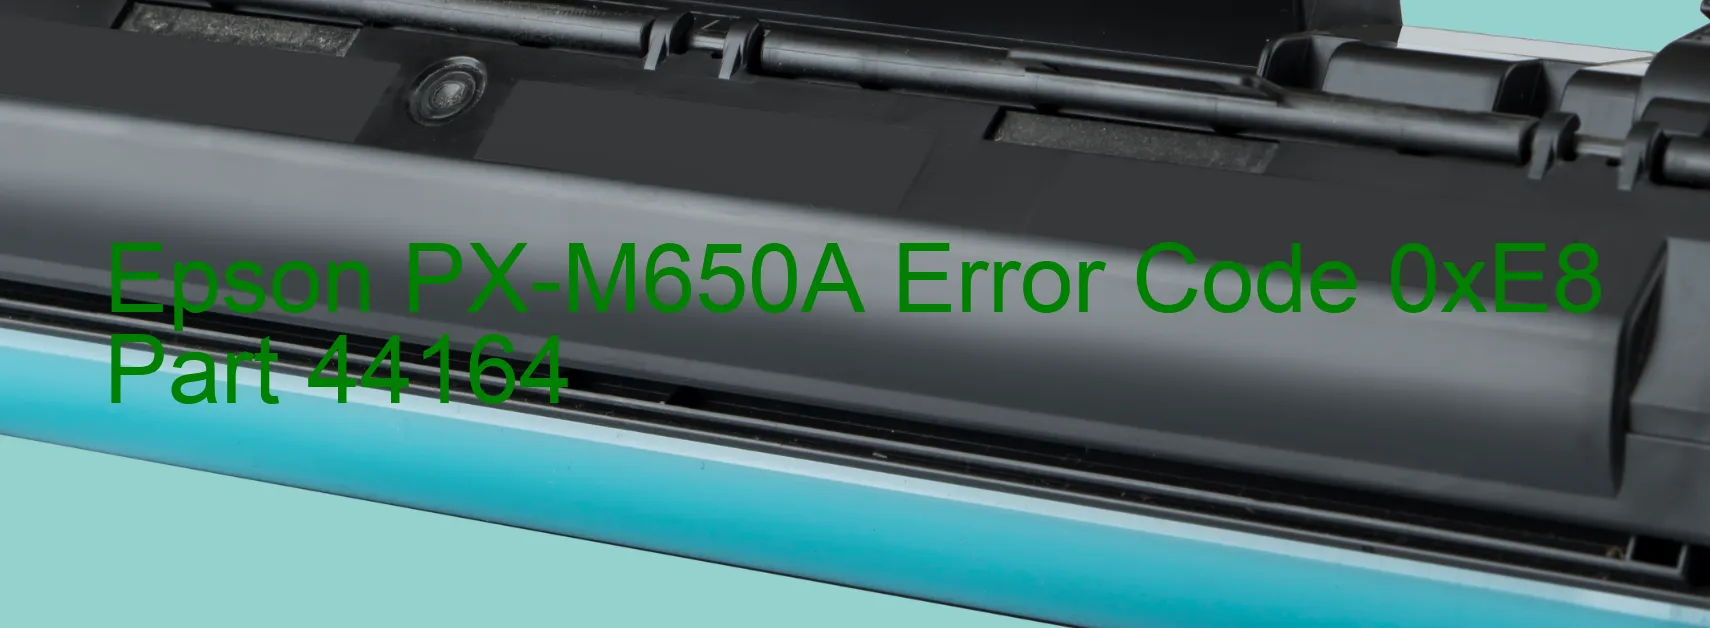 Epson PX-M650A Error Code 0xE8 Part 44164